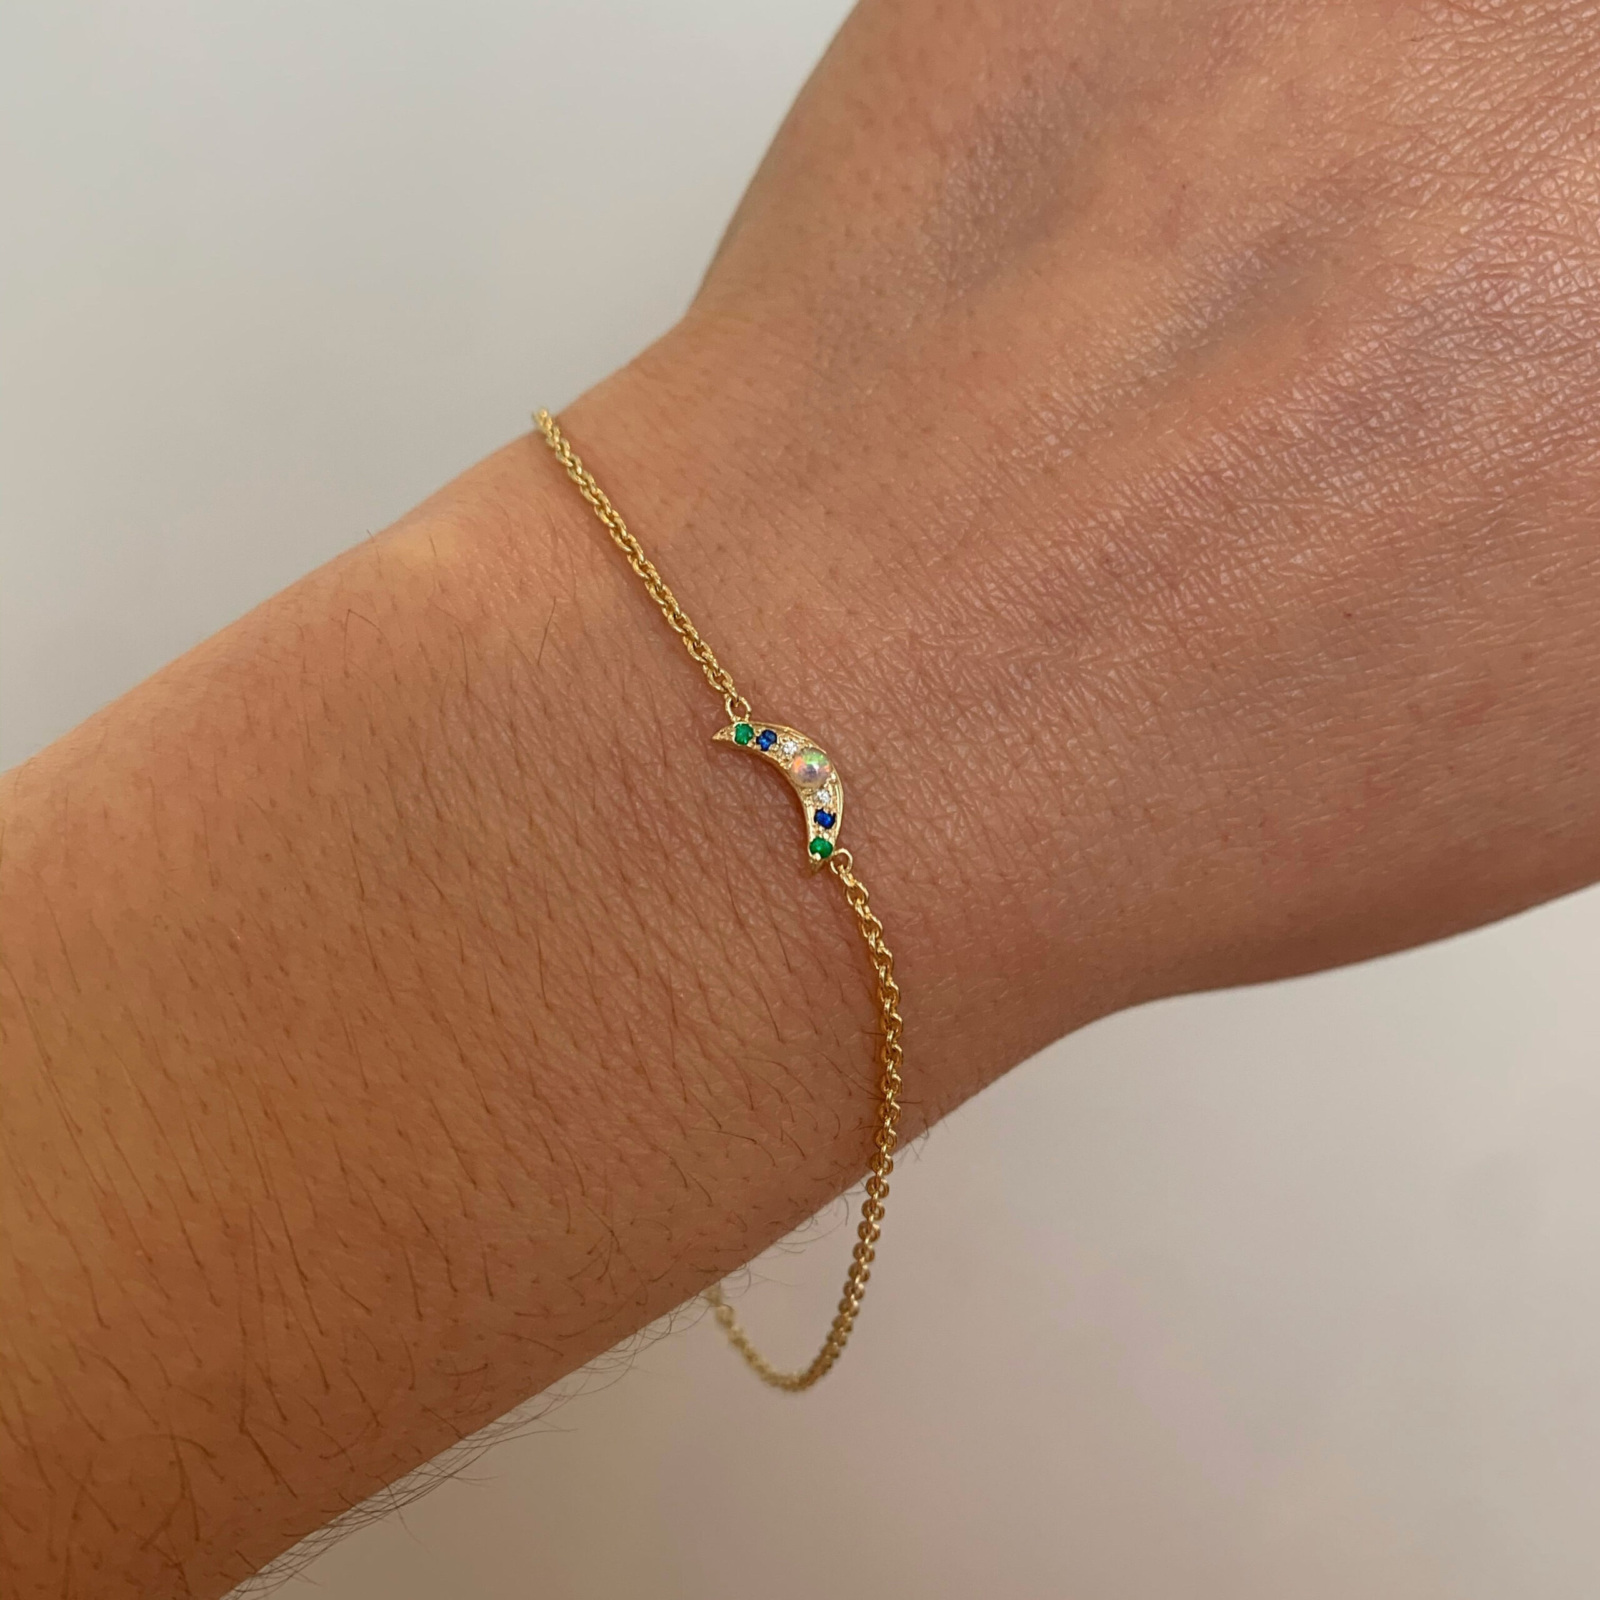 wearing the custom mini moon bracelet